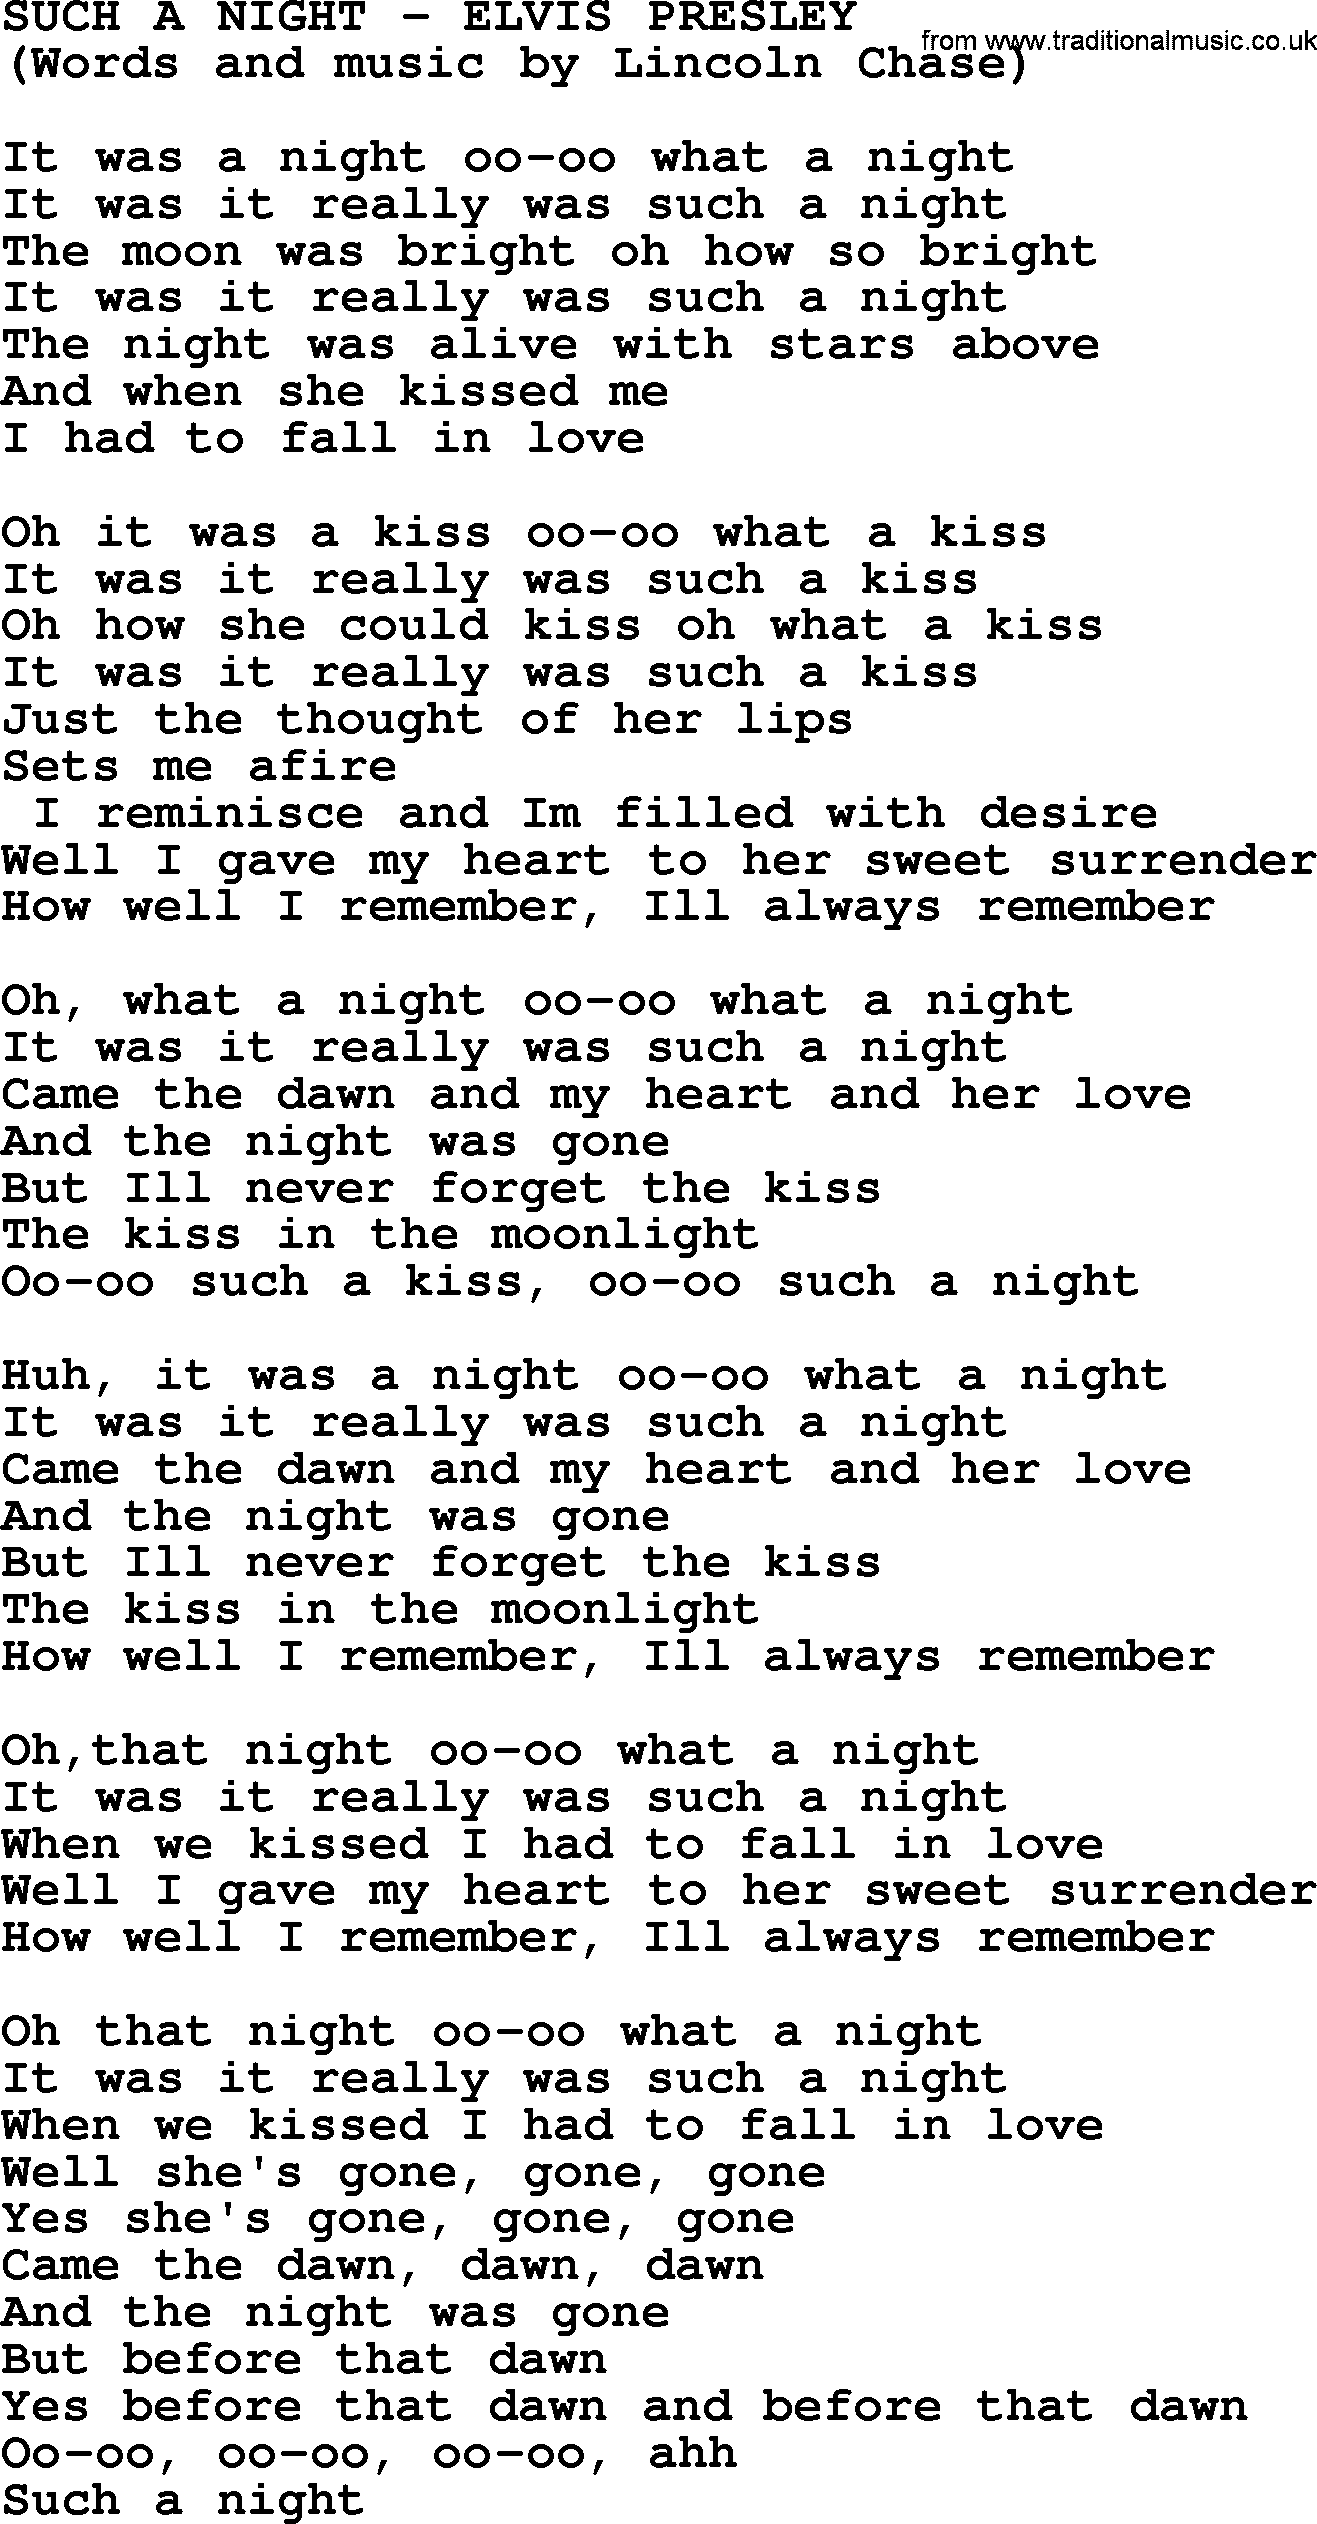 Elvis Presley song: Such A Night lyrics